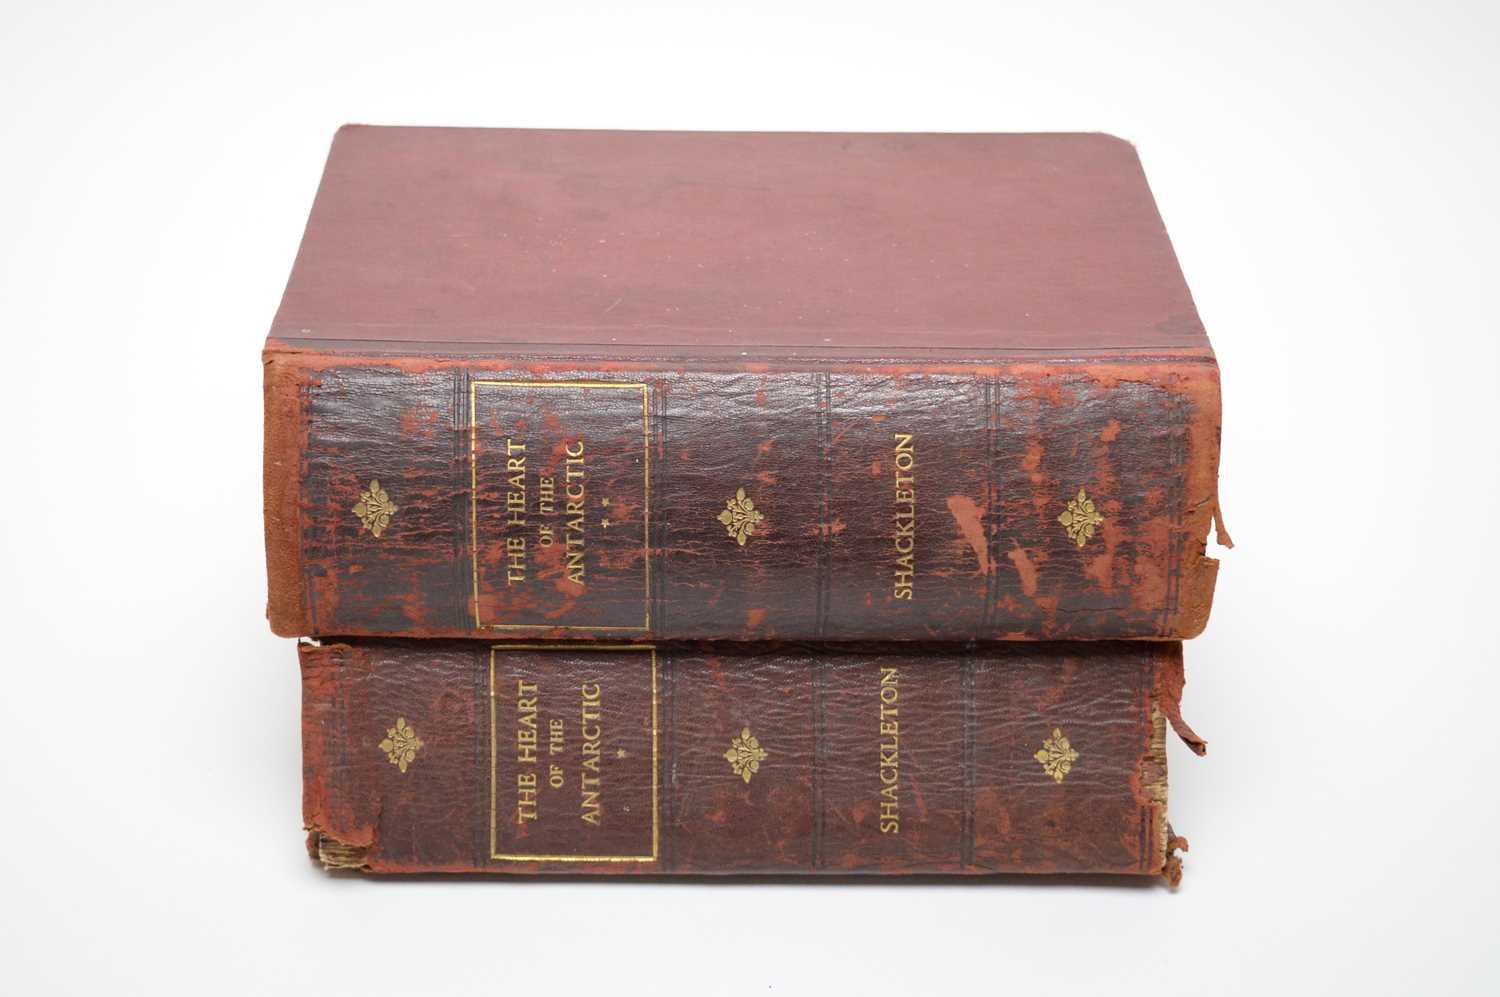 Lot 538 - Ernest Henry Shackleton, The Heart of the Antarctic, 2 vols, 1909.